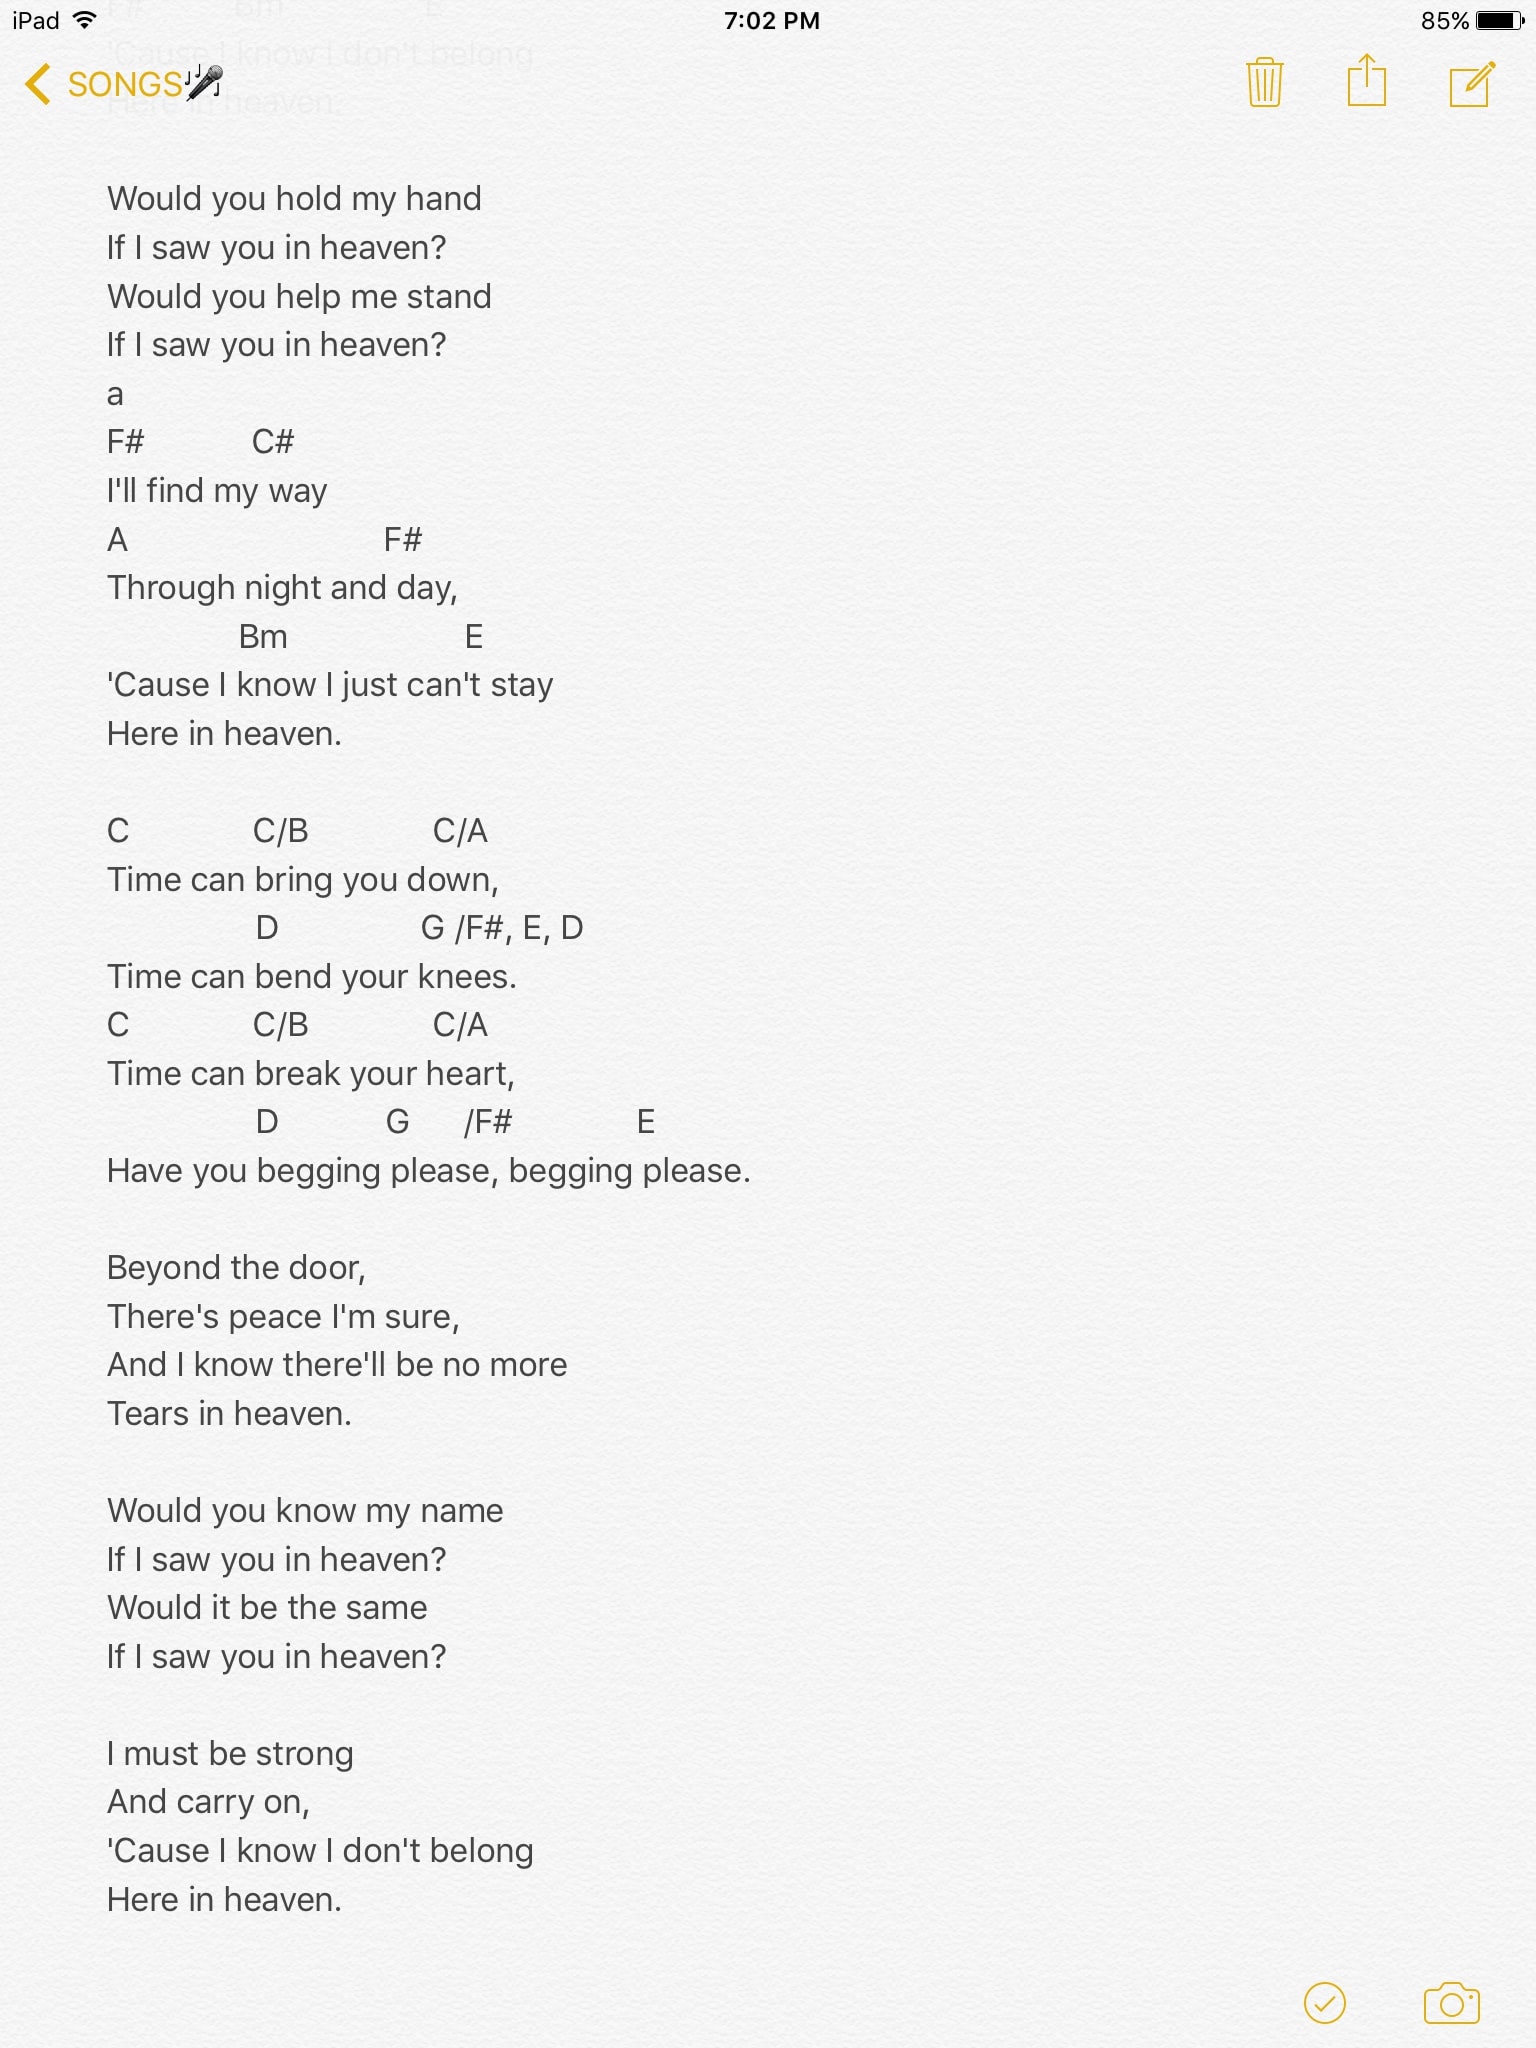 Eric Clapton - Tears In Heaven (lyrics) 